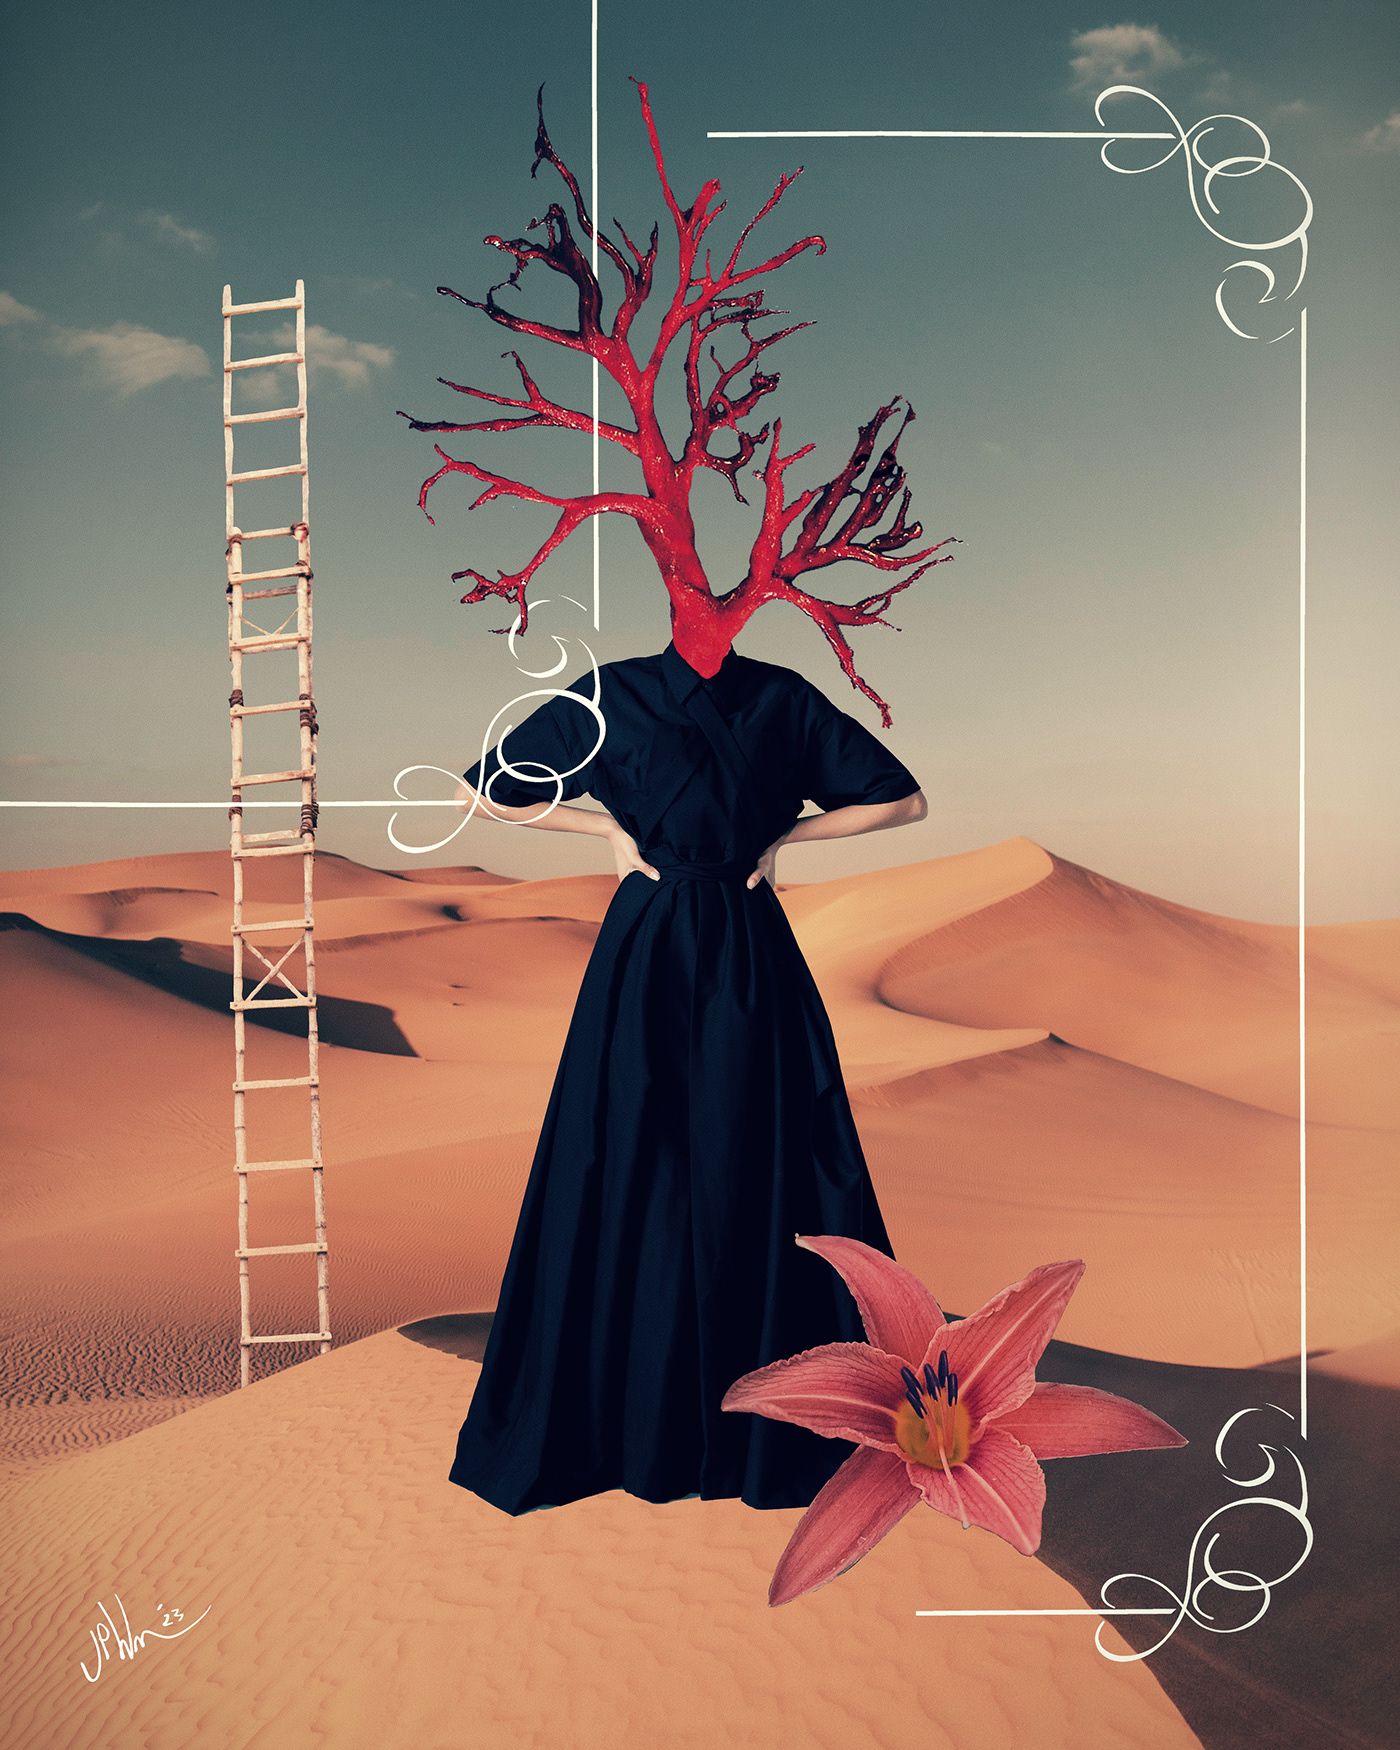 collage Digital Art  Digital Collage art surrealism ladder CLOT desert